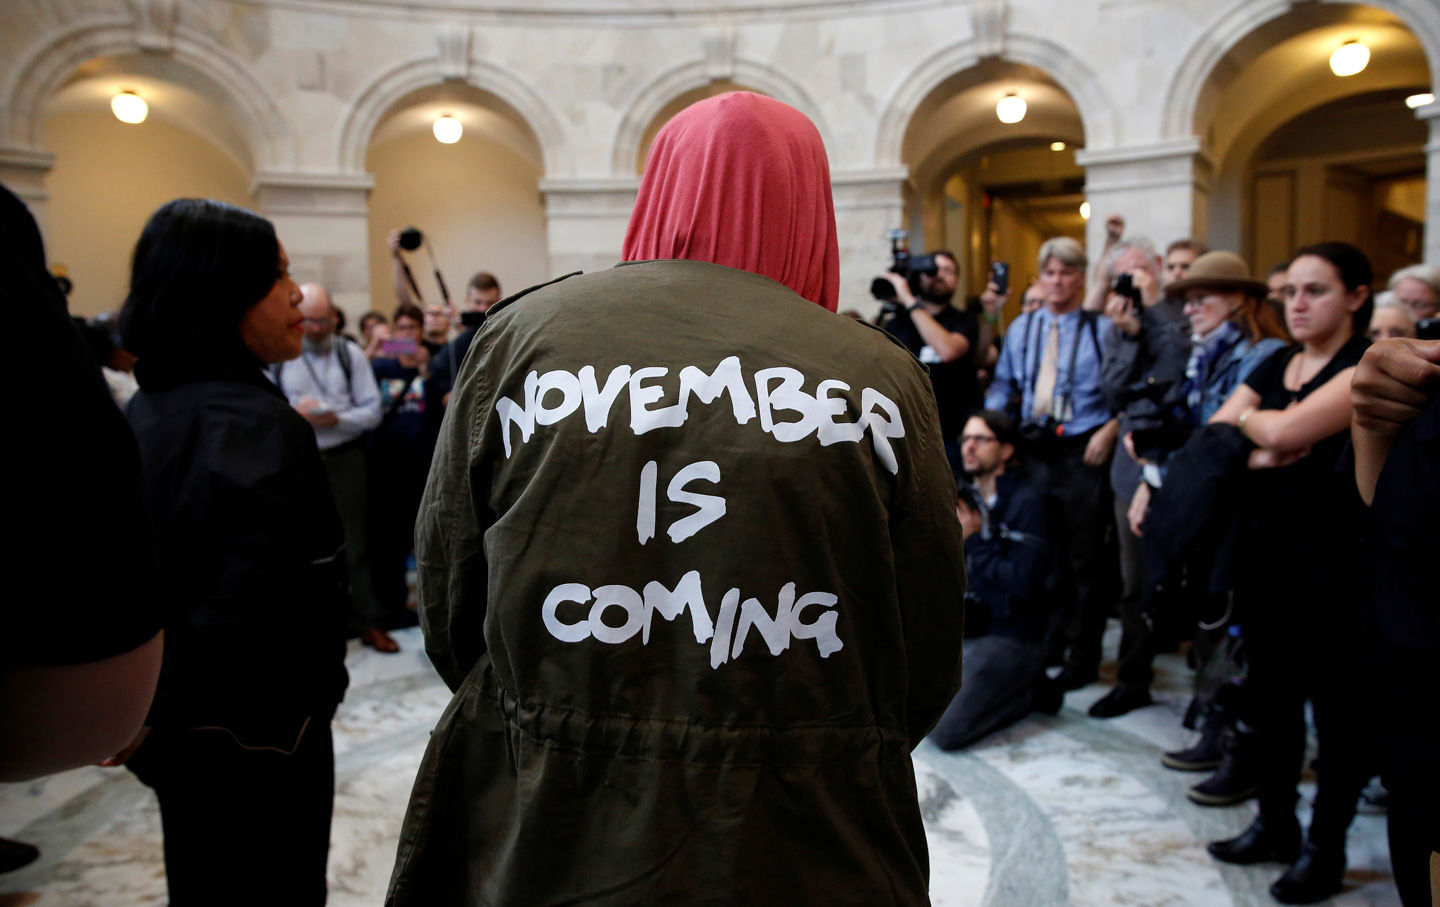 Kavanaugh-protest-November-Is-Coming-rtr-img.jpg